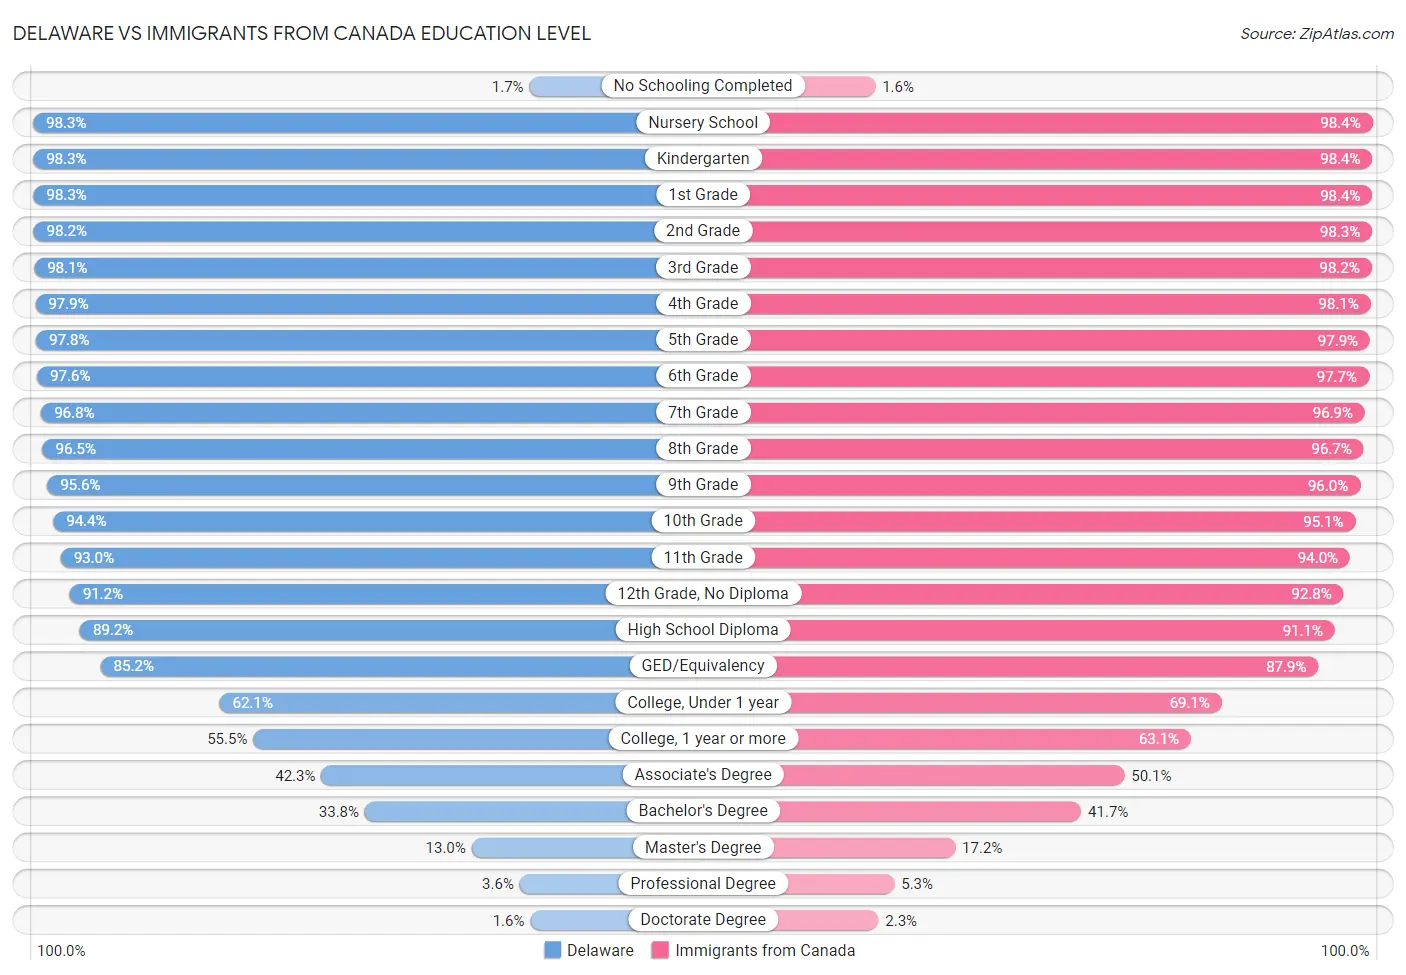 Delaware vs Immigrants from Canada Education Level